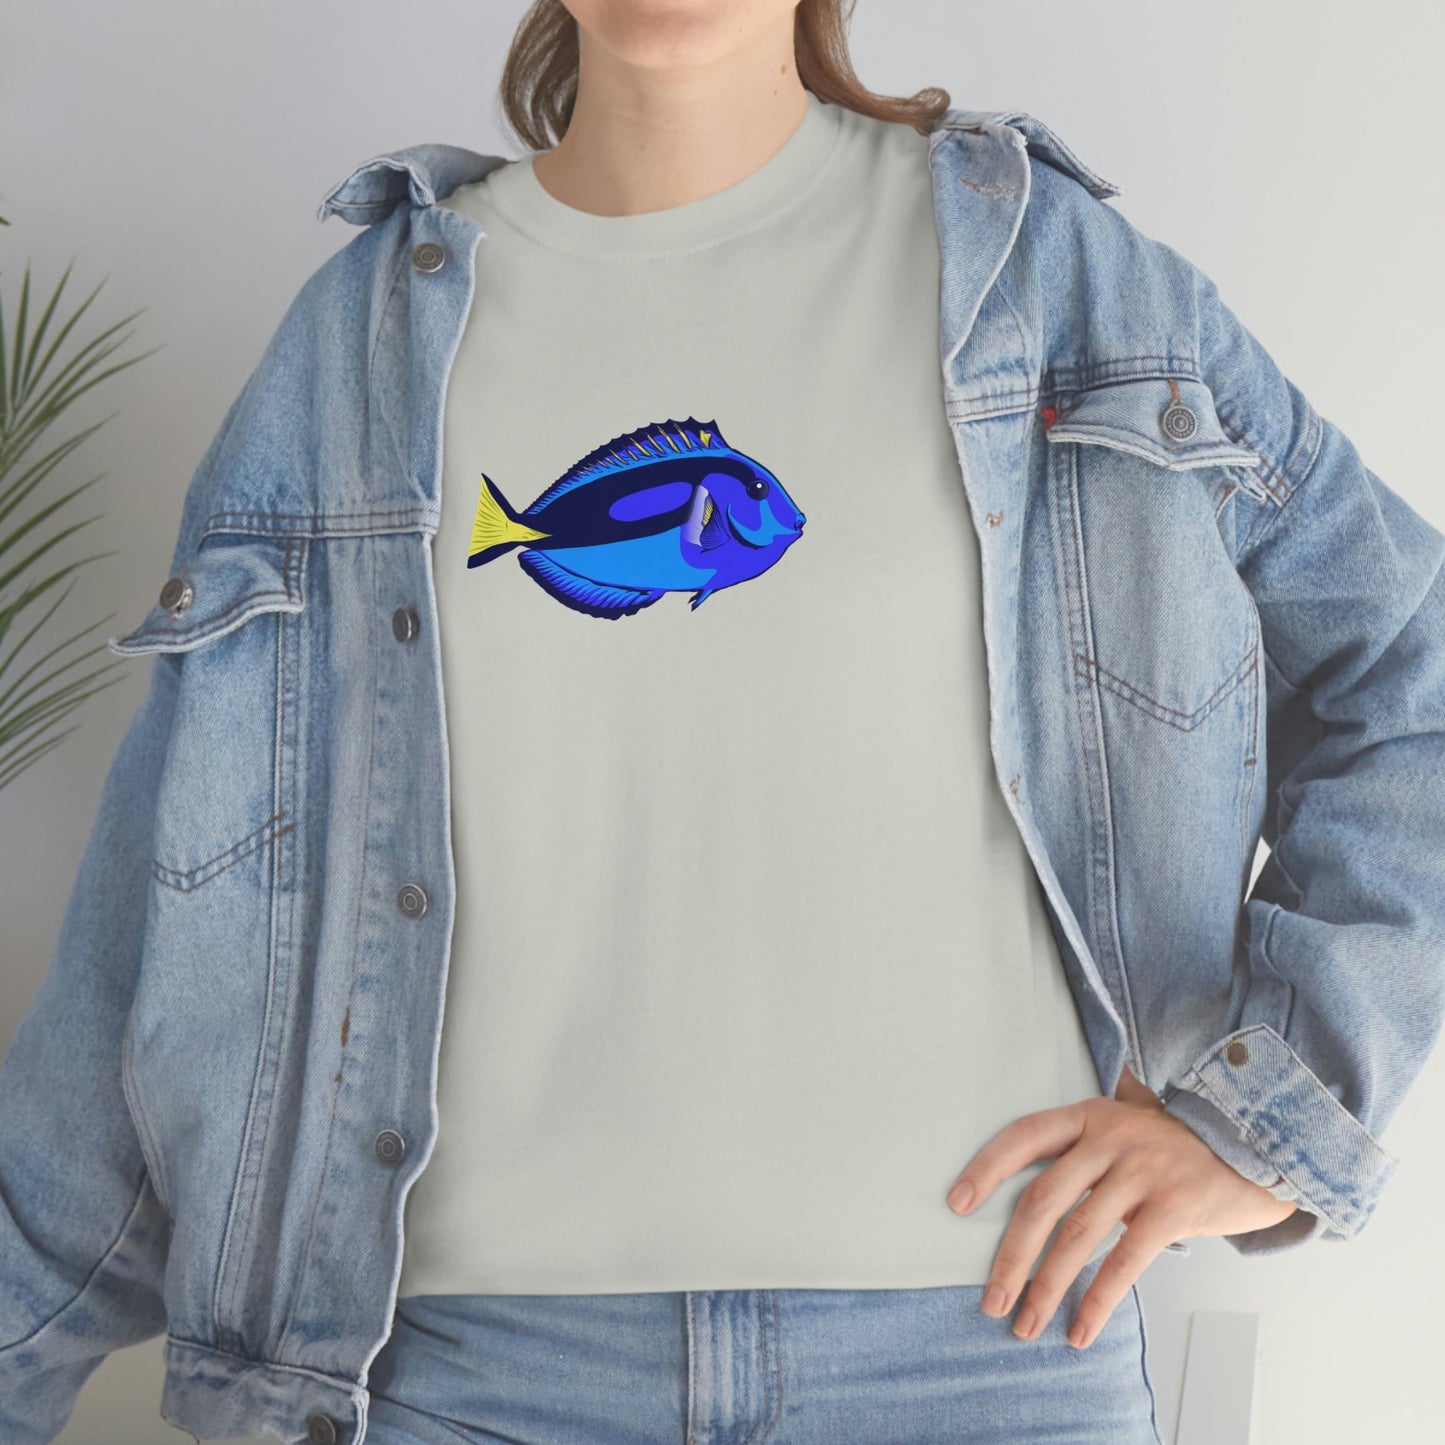 Simple Blue Tang Shirt - Reef of Clowns